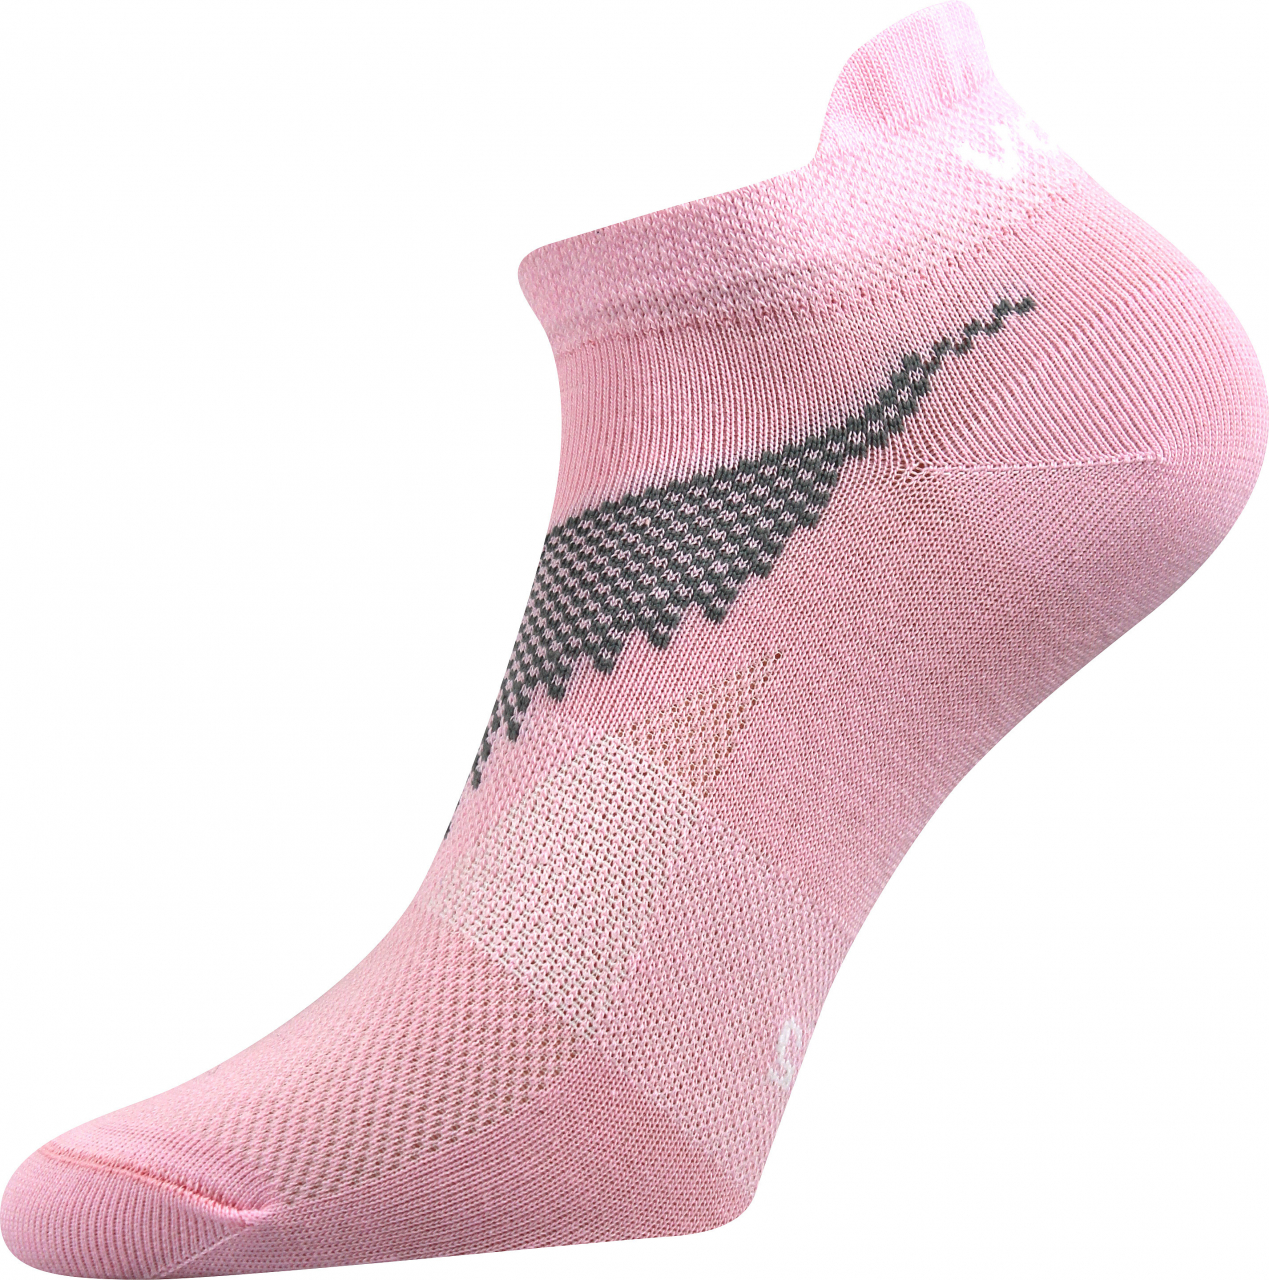 Ponožky sportovní nízké Voxx Iris - růžové